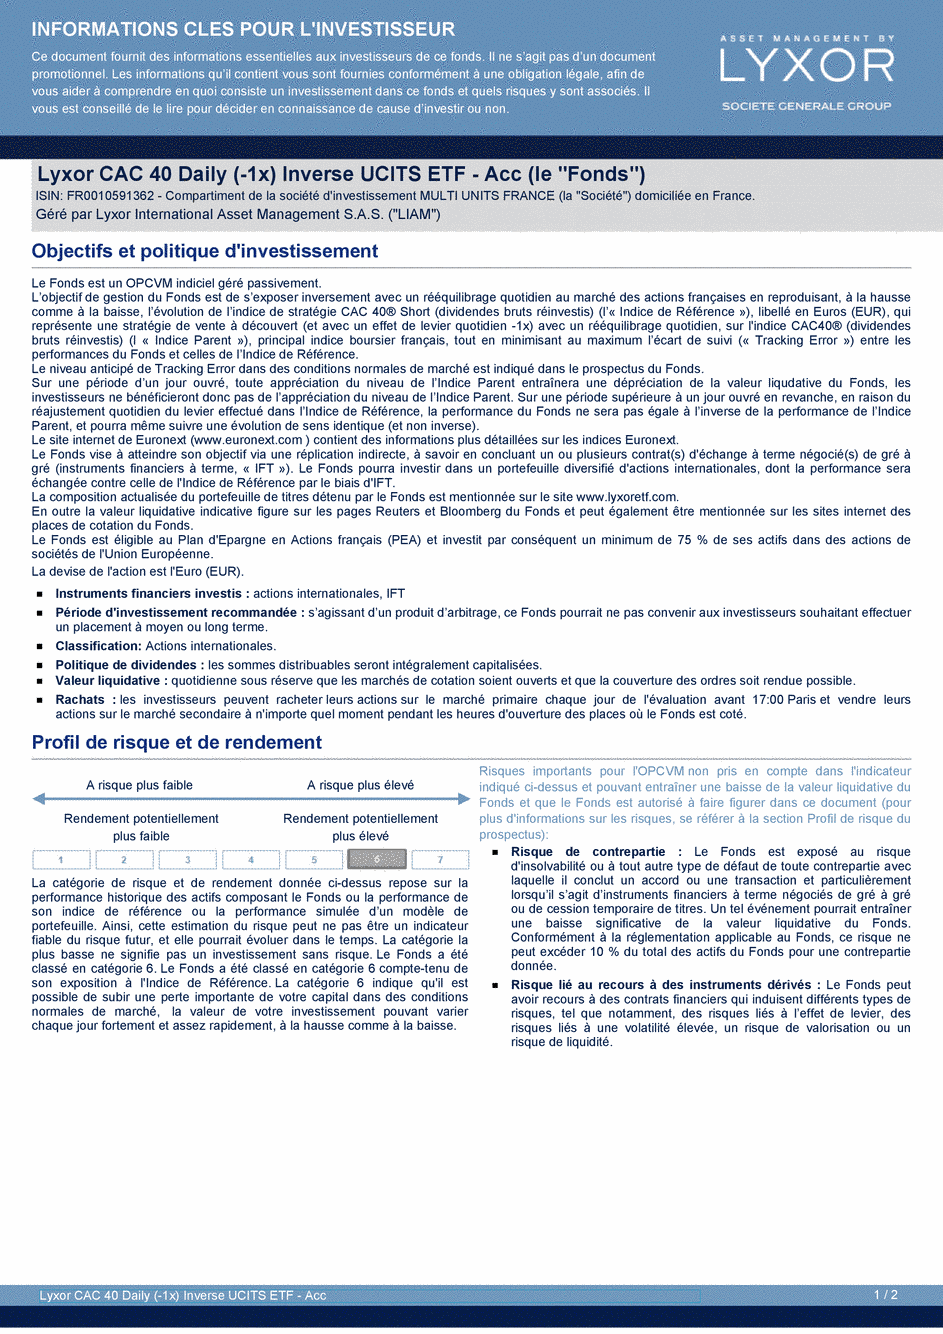 DICI Lyxor CAC 40 Daily (-1x) Inverse UCITS ETF - Acc - 19/02/2020 - Français